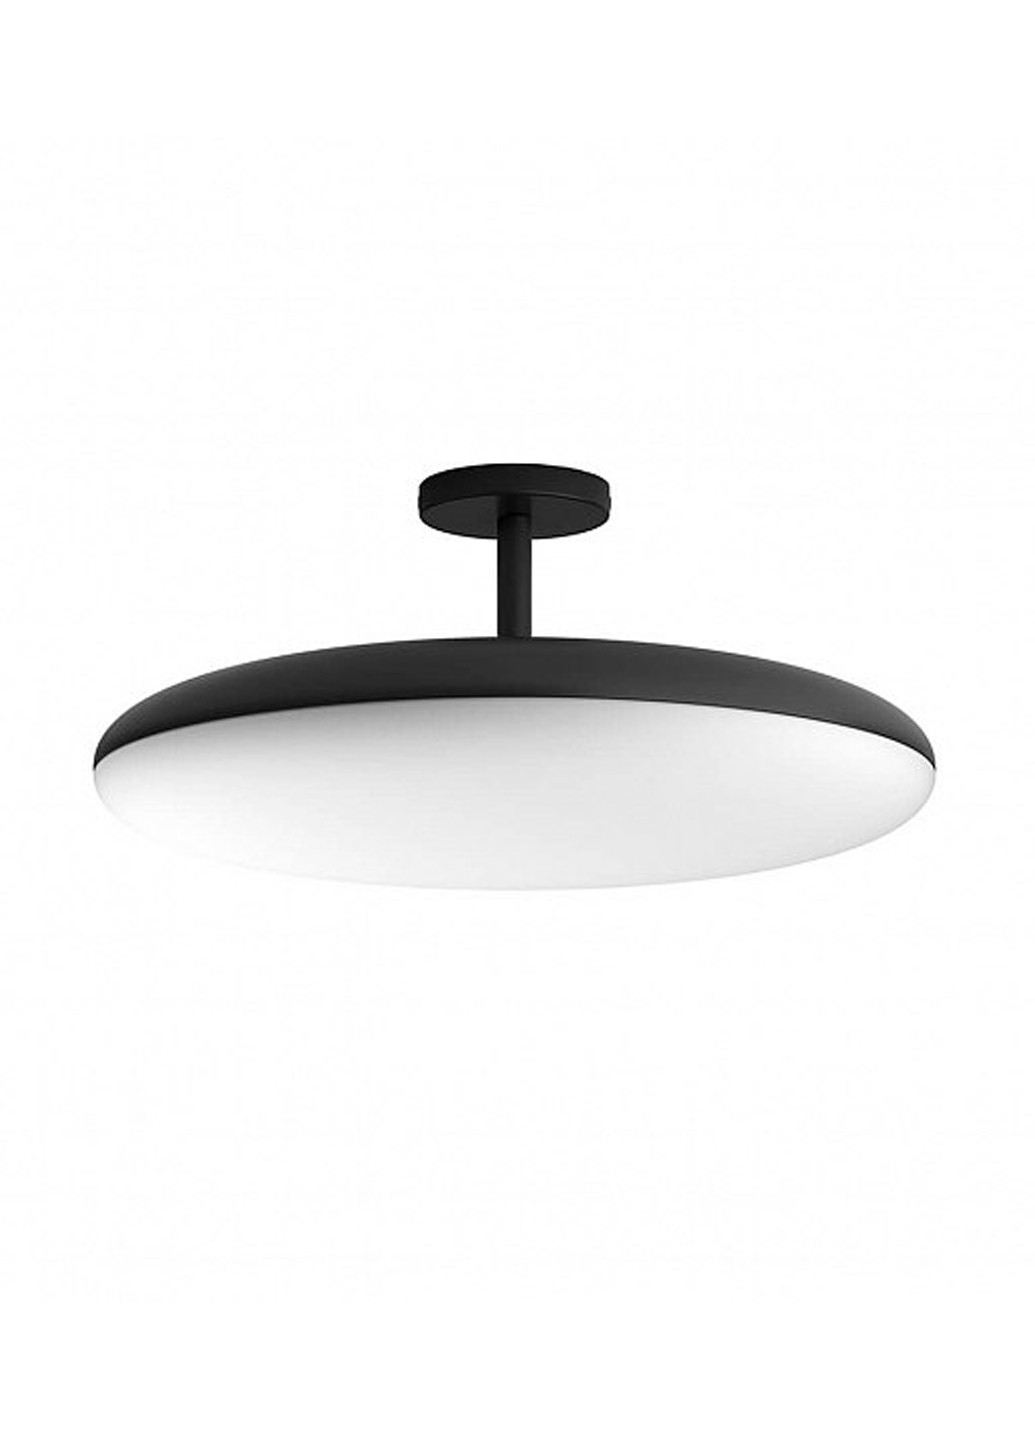 Смарт-светильник Cher Hue ceiling-pendant lamp black 1x39W 24V (40969/30/P7) Philips смарт cher hue ceiling pendant lamp black 1x39w 24v (40969/30/p7) (142289824)